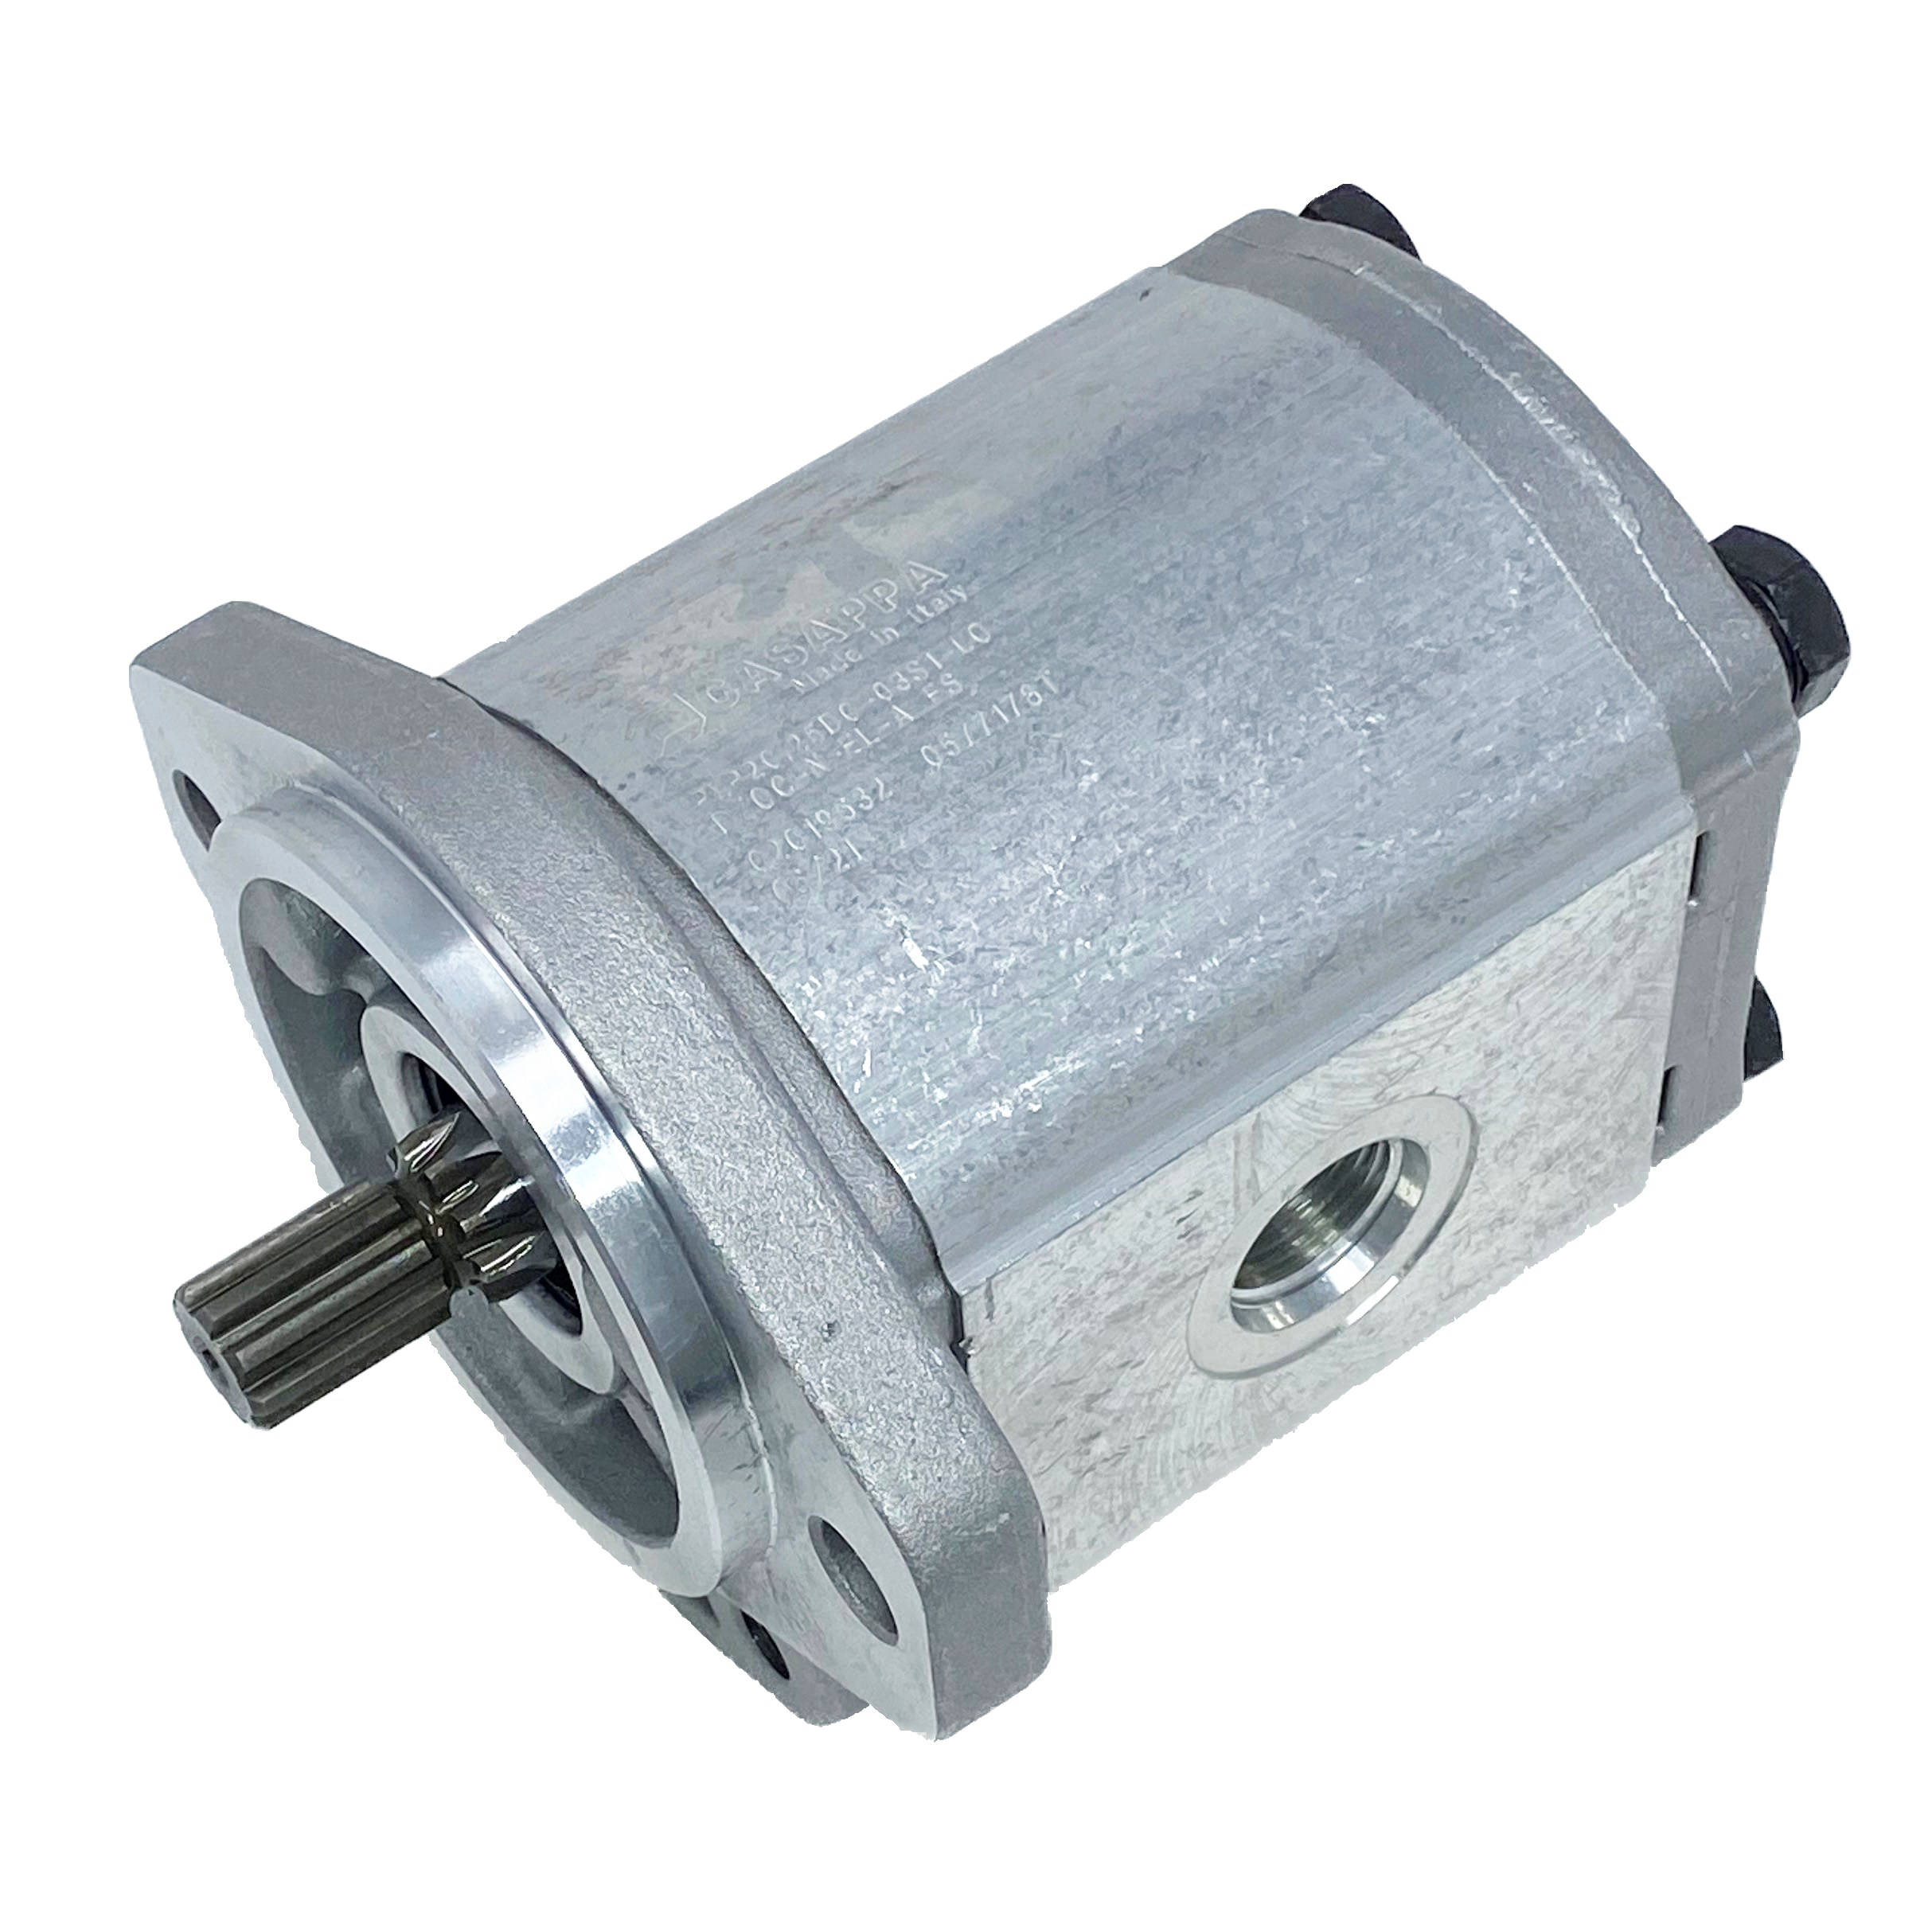 PLP20.25D0-07S1-LOD/OC-N-EL : Casappa Polaris Gear Pump, 26.42cc, 2465psi Rated, 3045RPM, CW, 11T 16/32dp Shaft, SAE A 2-Bolt Flange, 0.75 (3/4") #12 SAE Inlet, 0.625 (5/8") #10 SAE Outlet, Aluminum Body & Flange